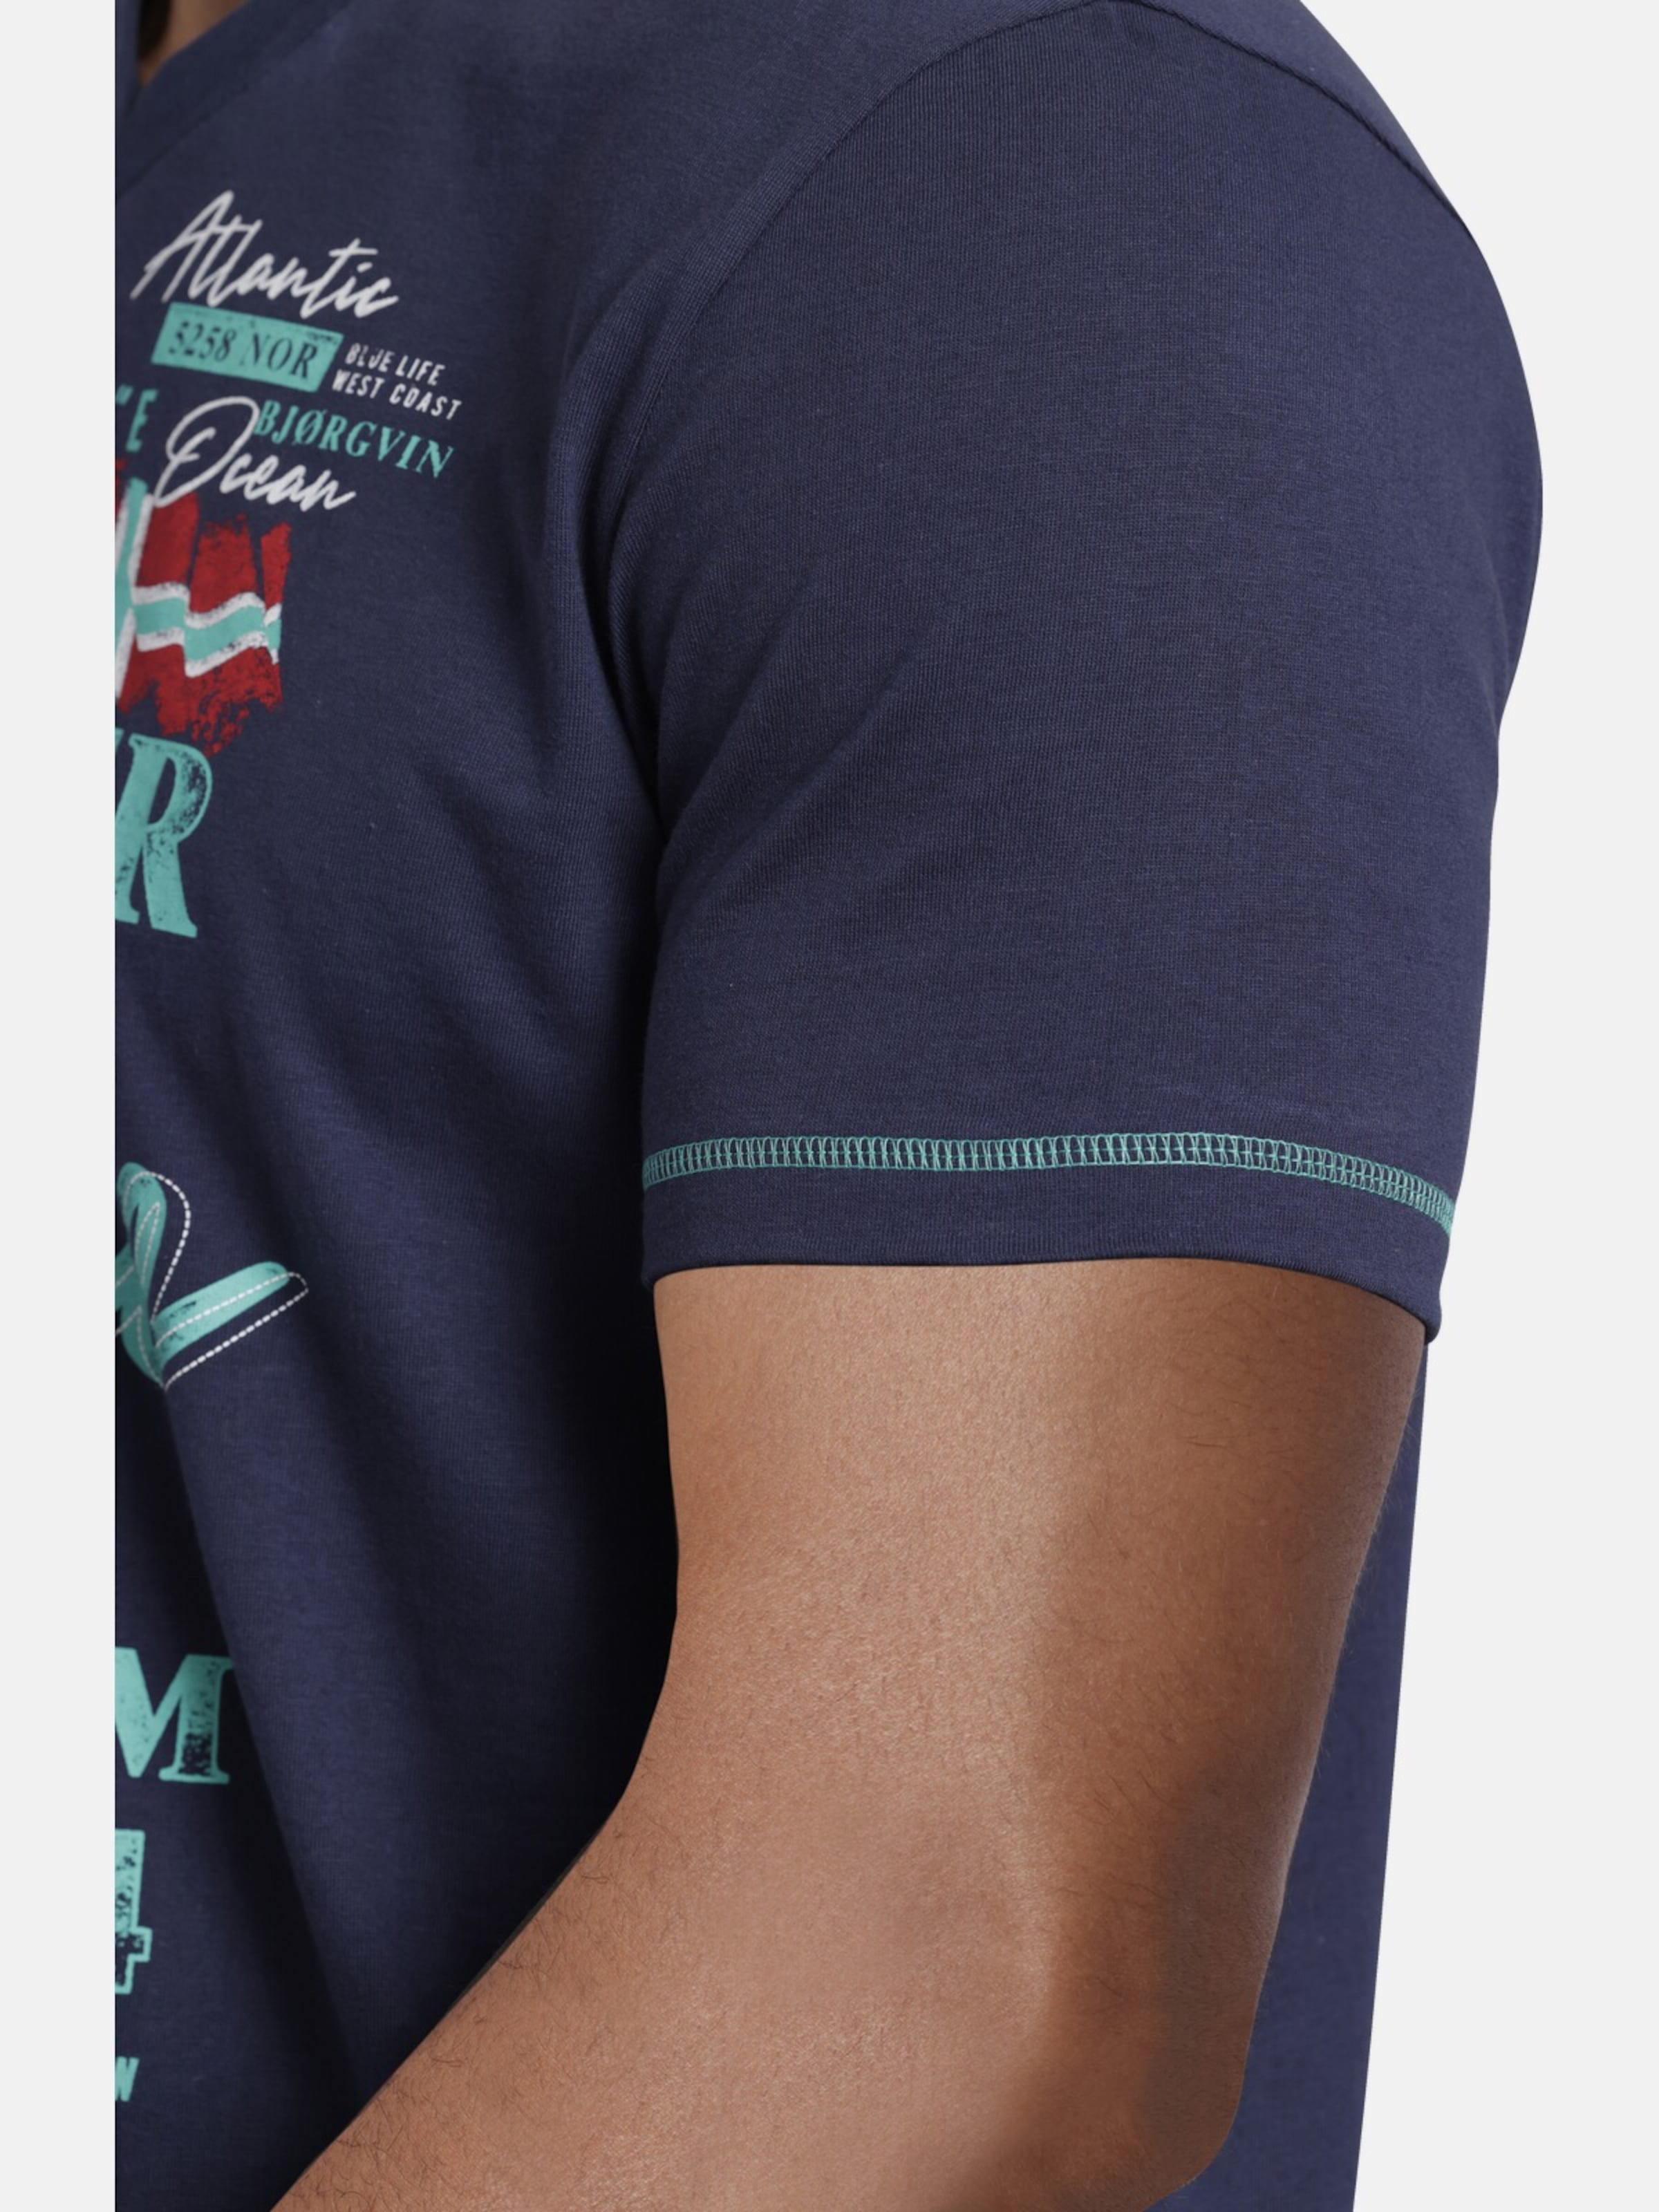 Männer Große Größen Jan Vanderstorm T-Shirt 'Nordger' in Aqua, Dunkelblau - XR91748